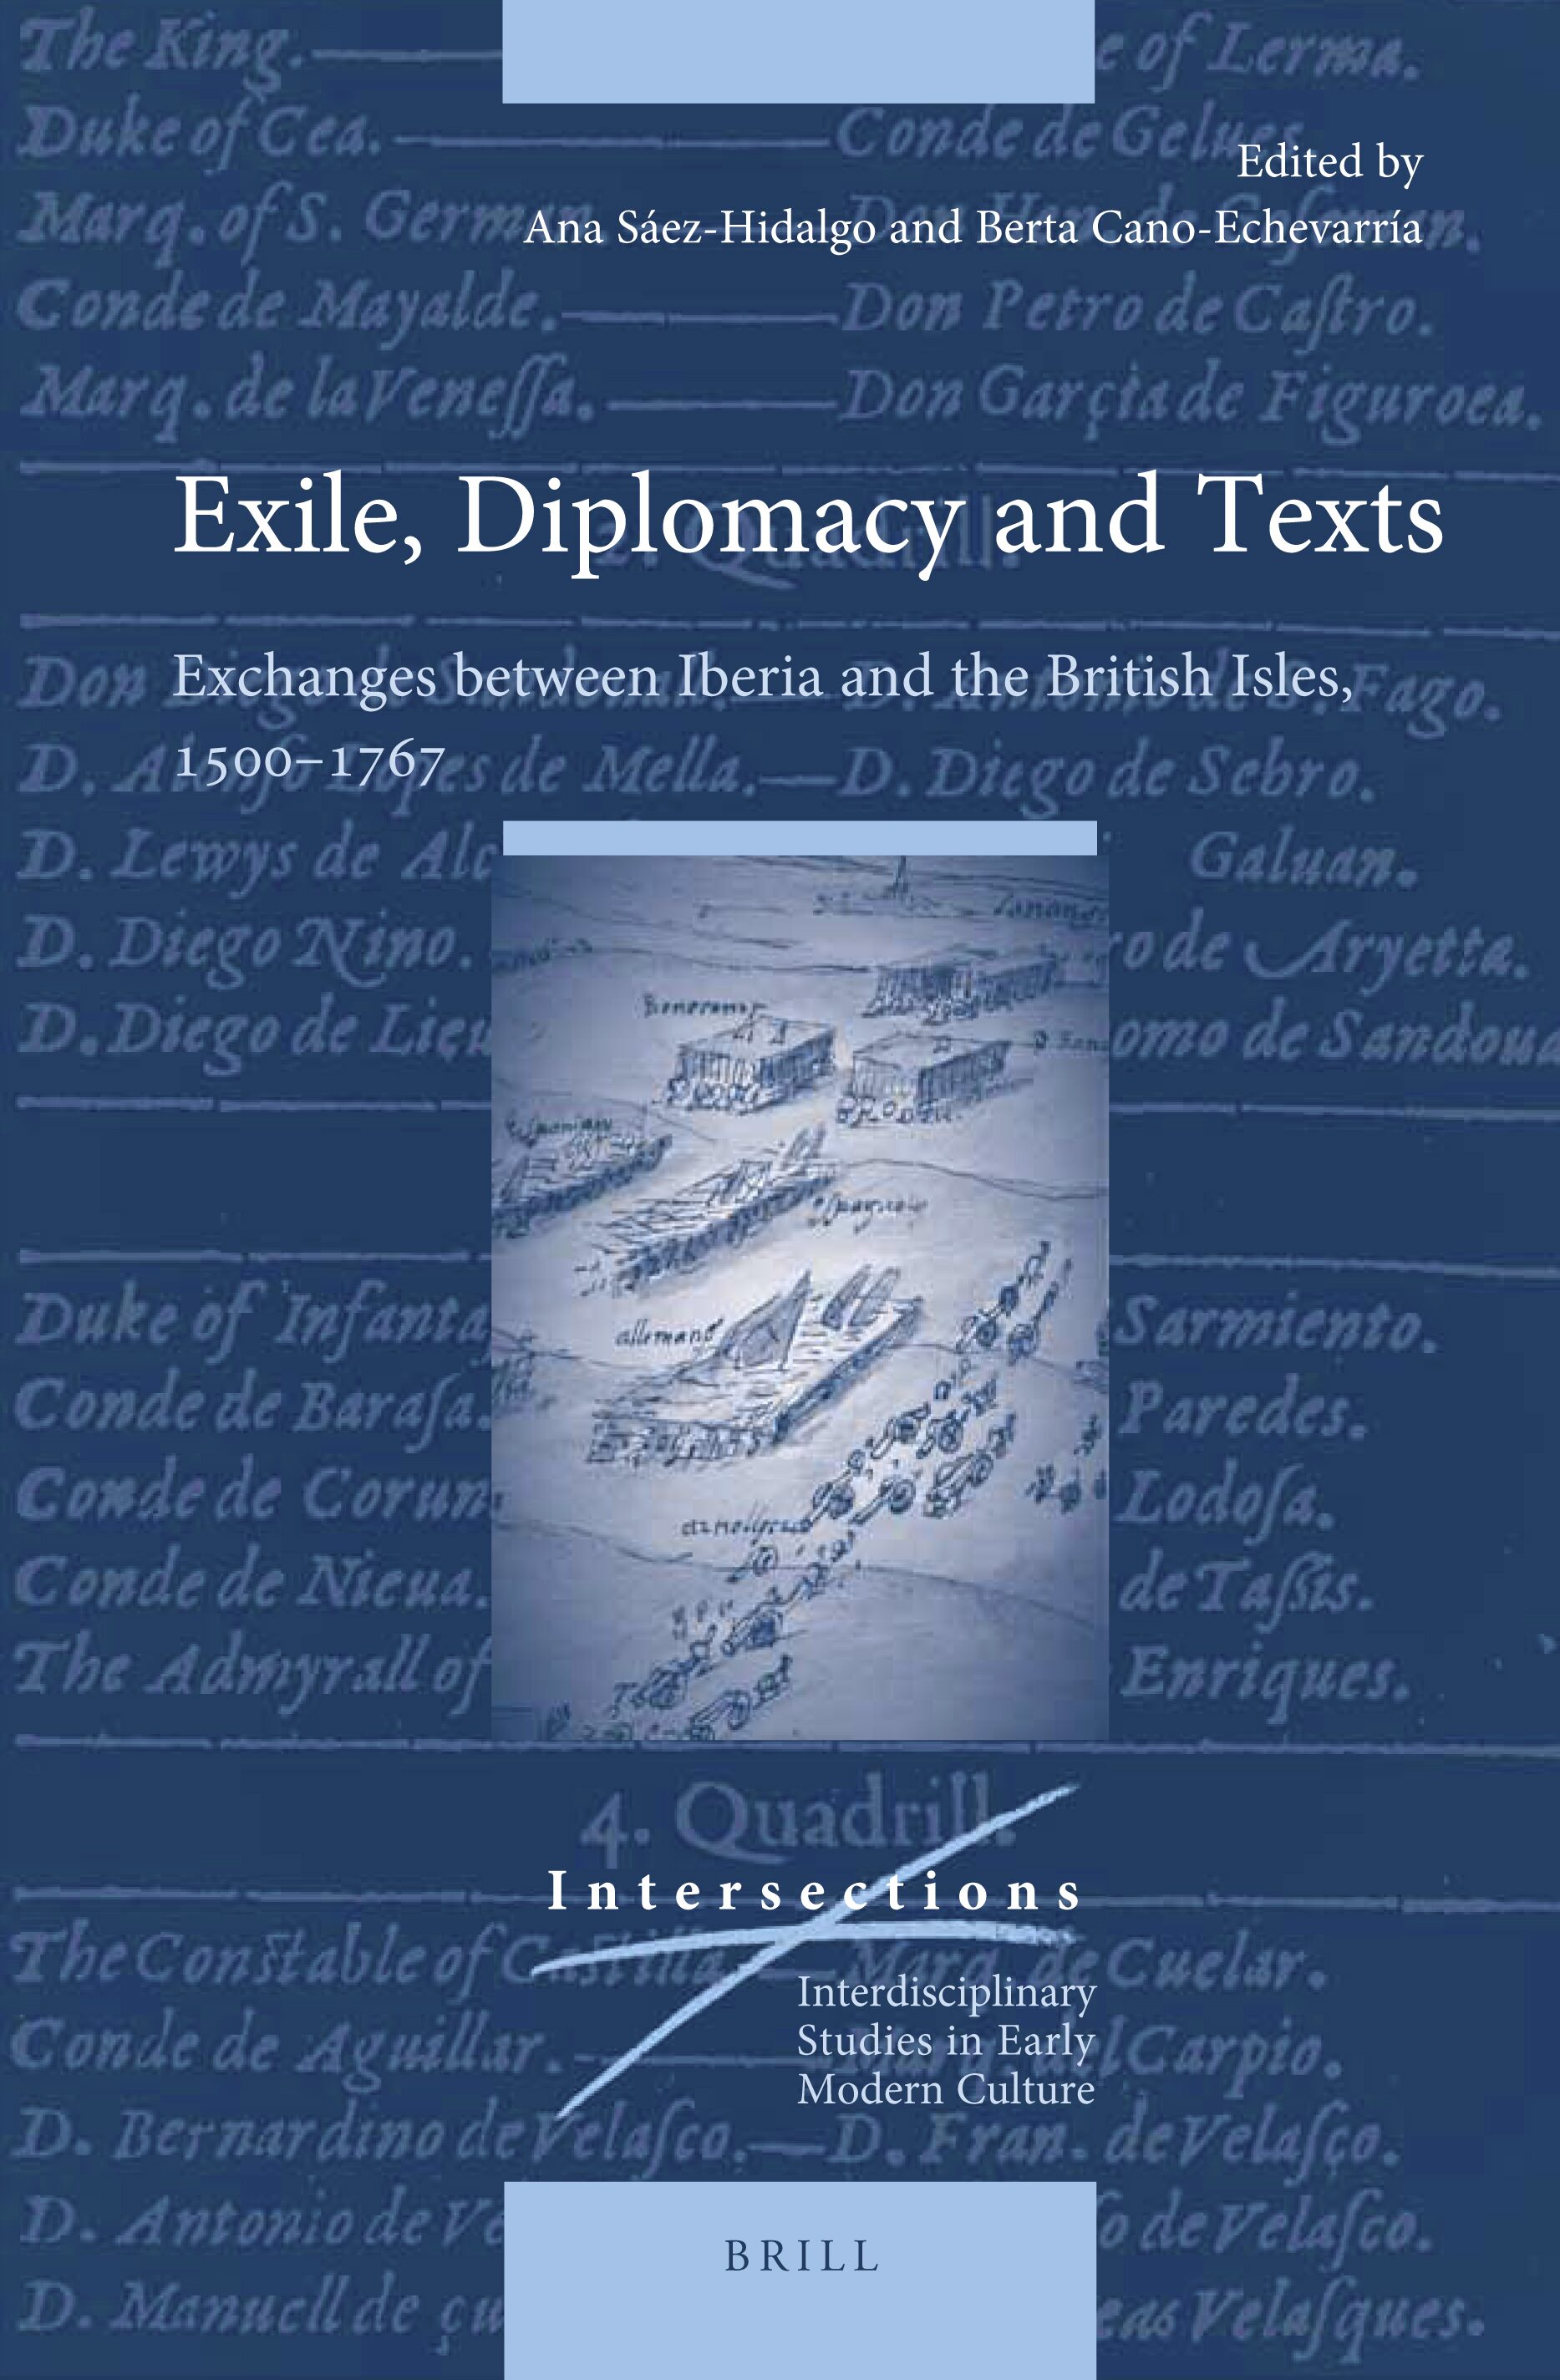 Imagen de portada del libro Exile, Diplomacy and Texts